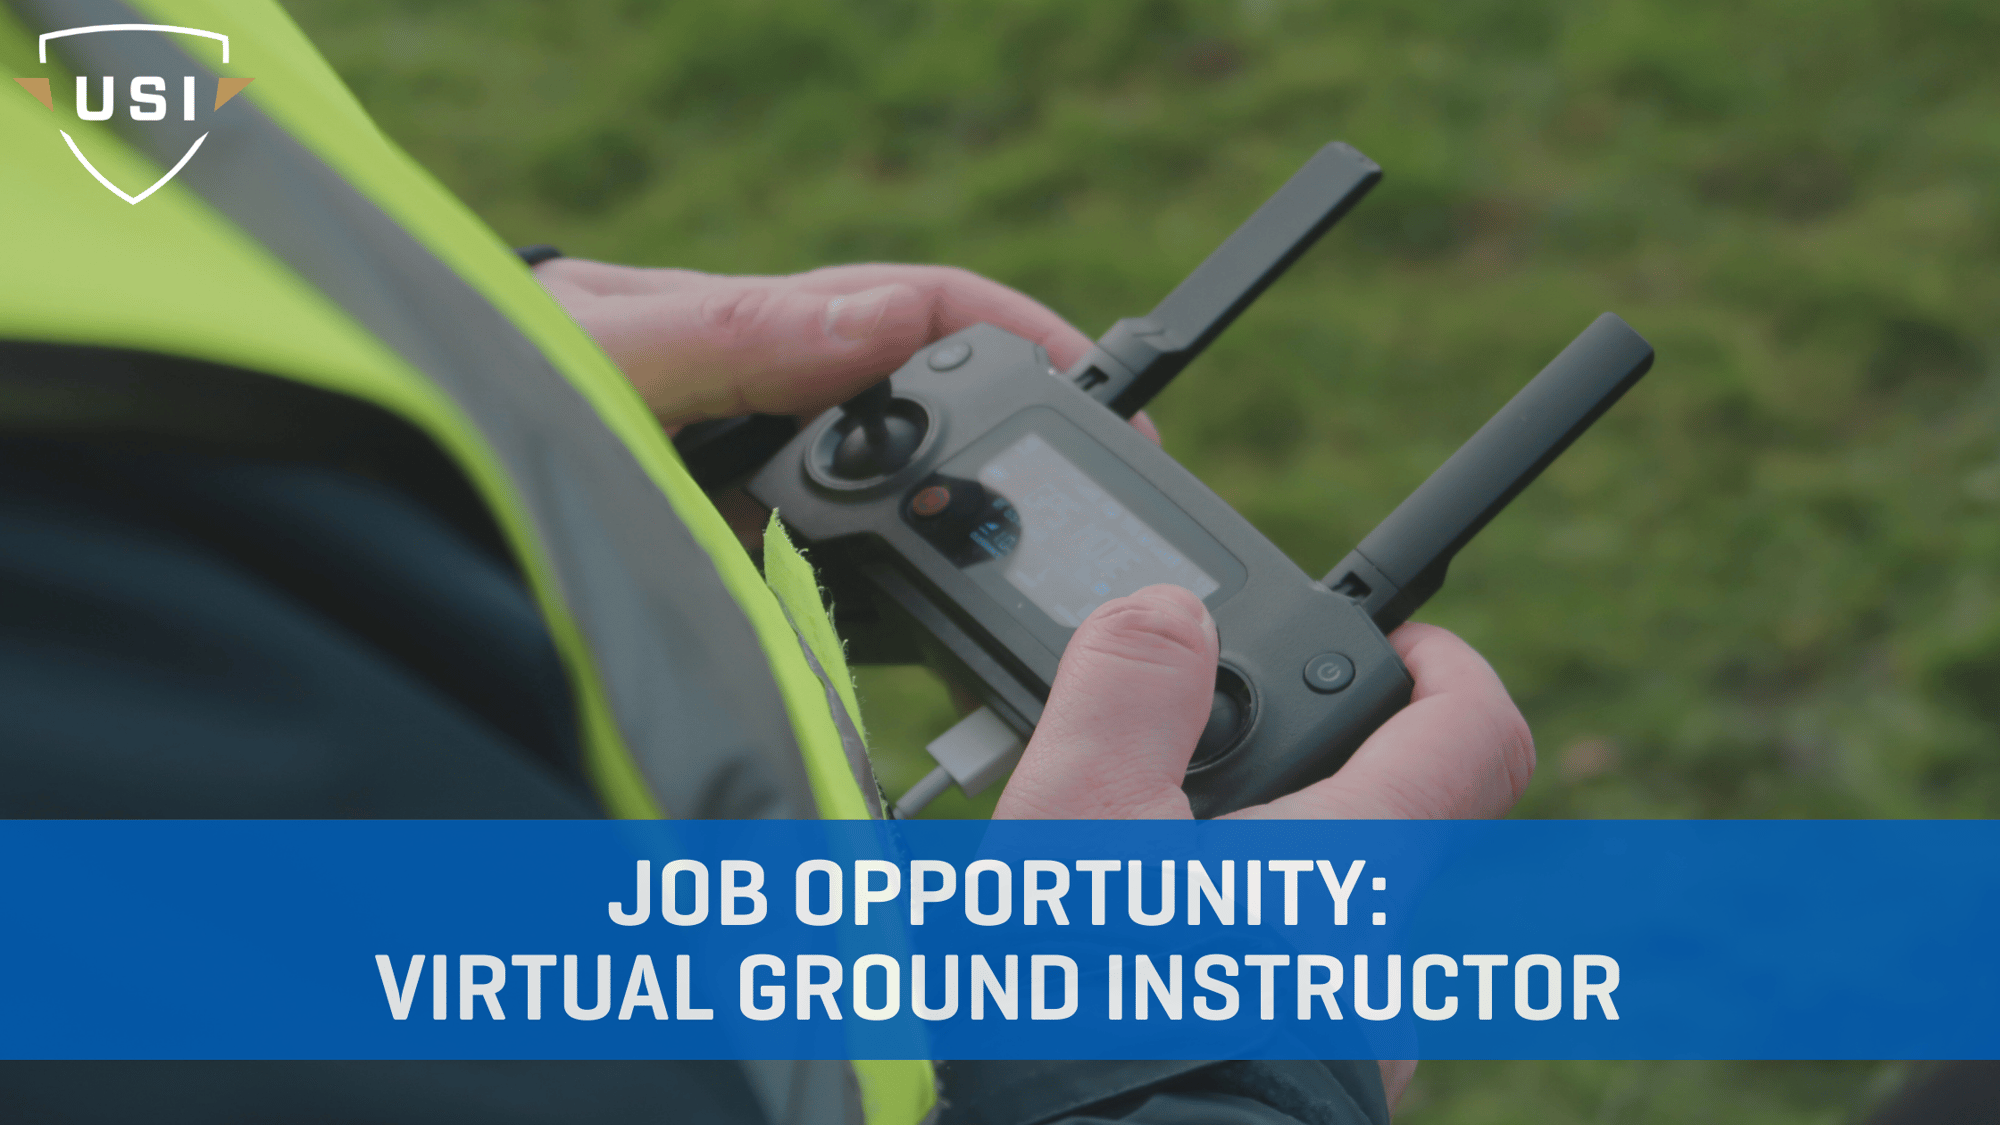 USI Job Opportunity - Virtual Instructor